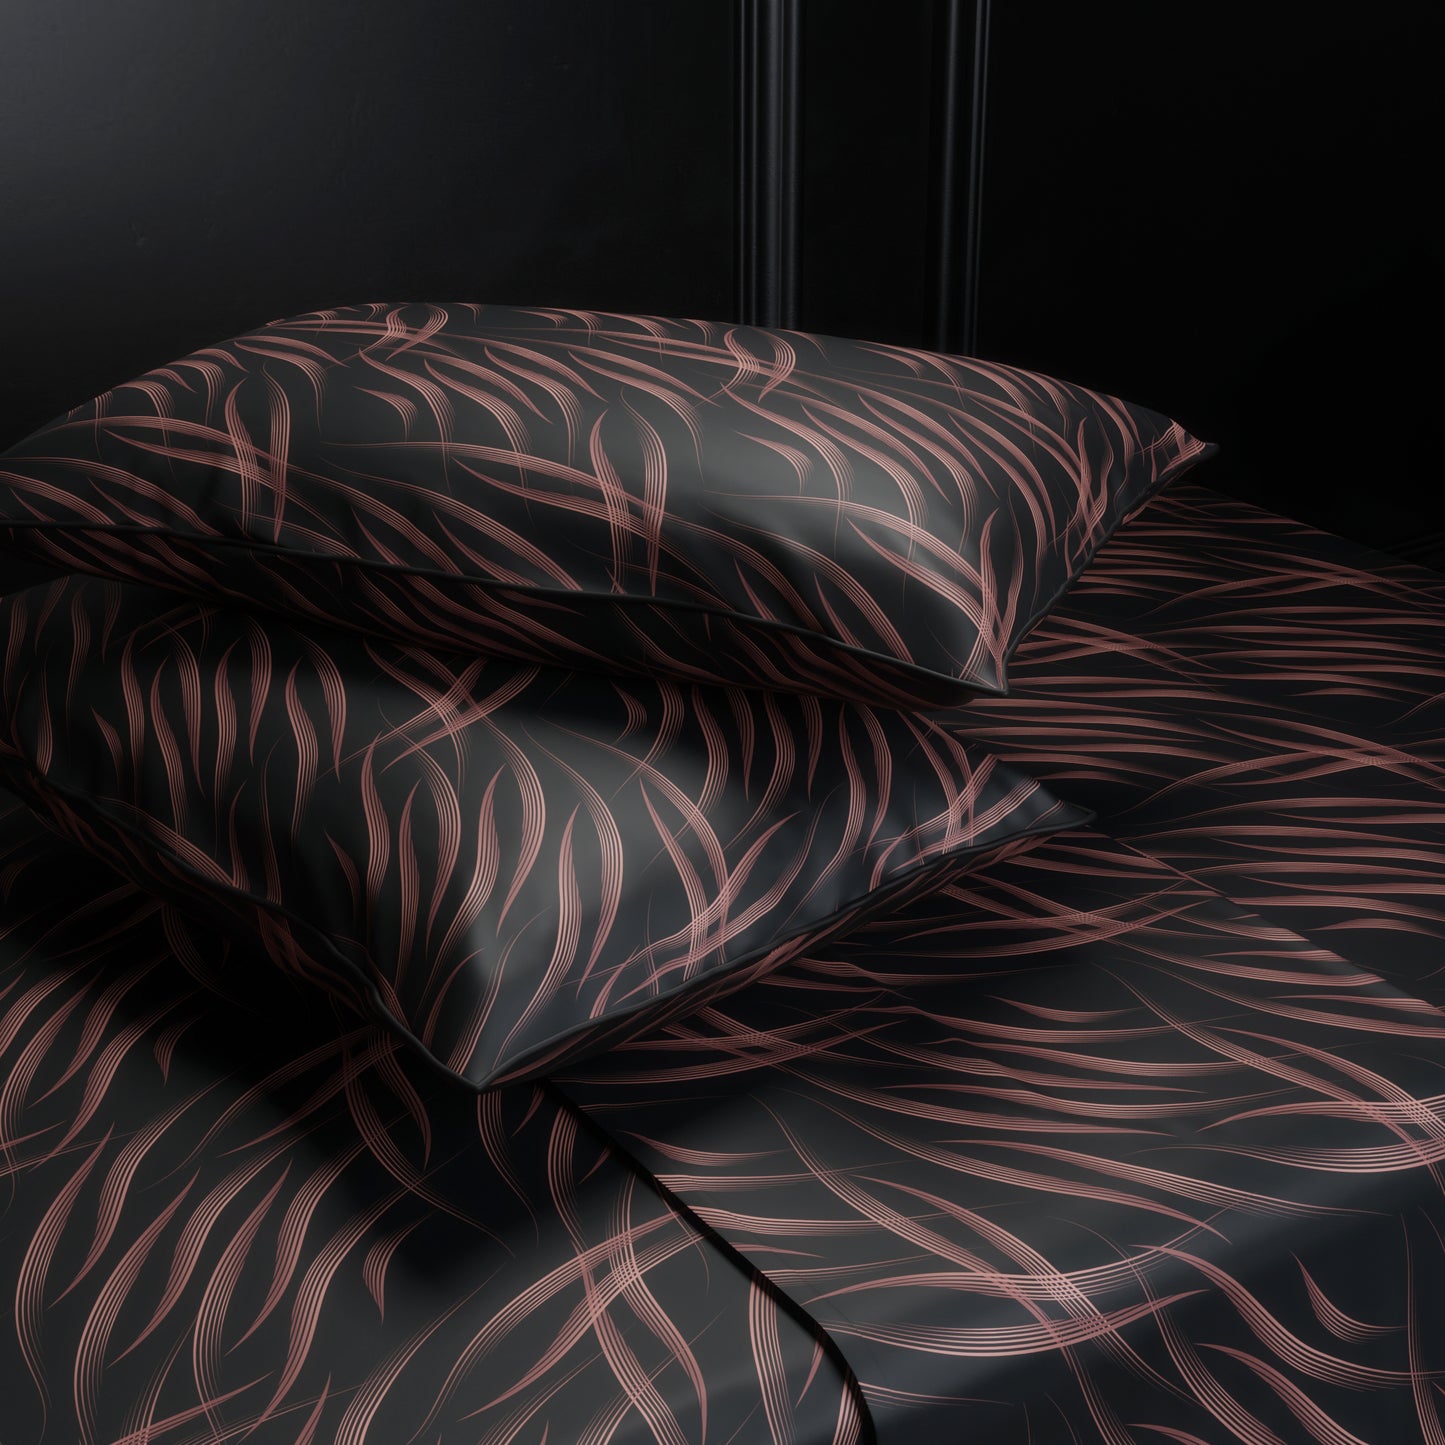 Noir Rouge Bedsheet Set